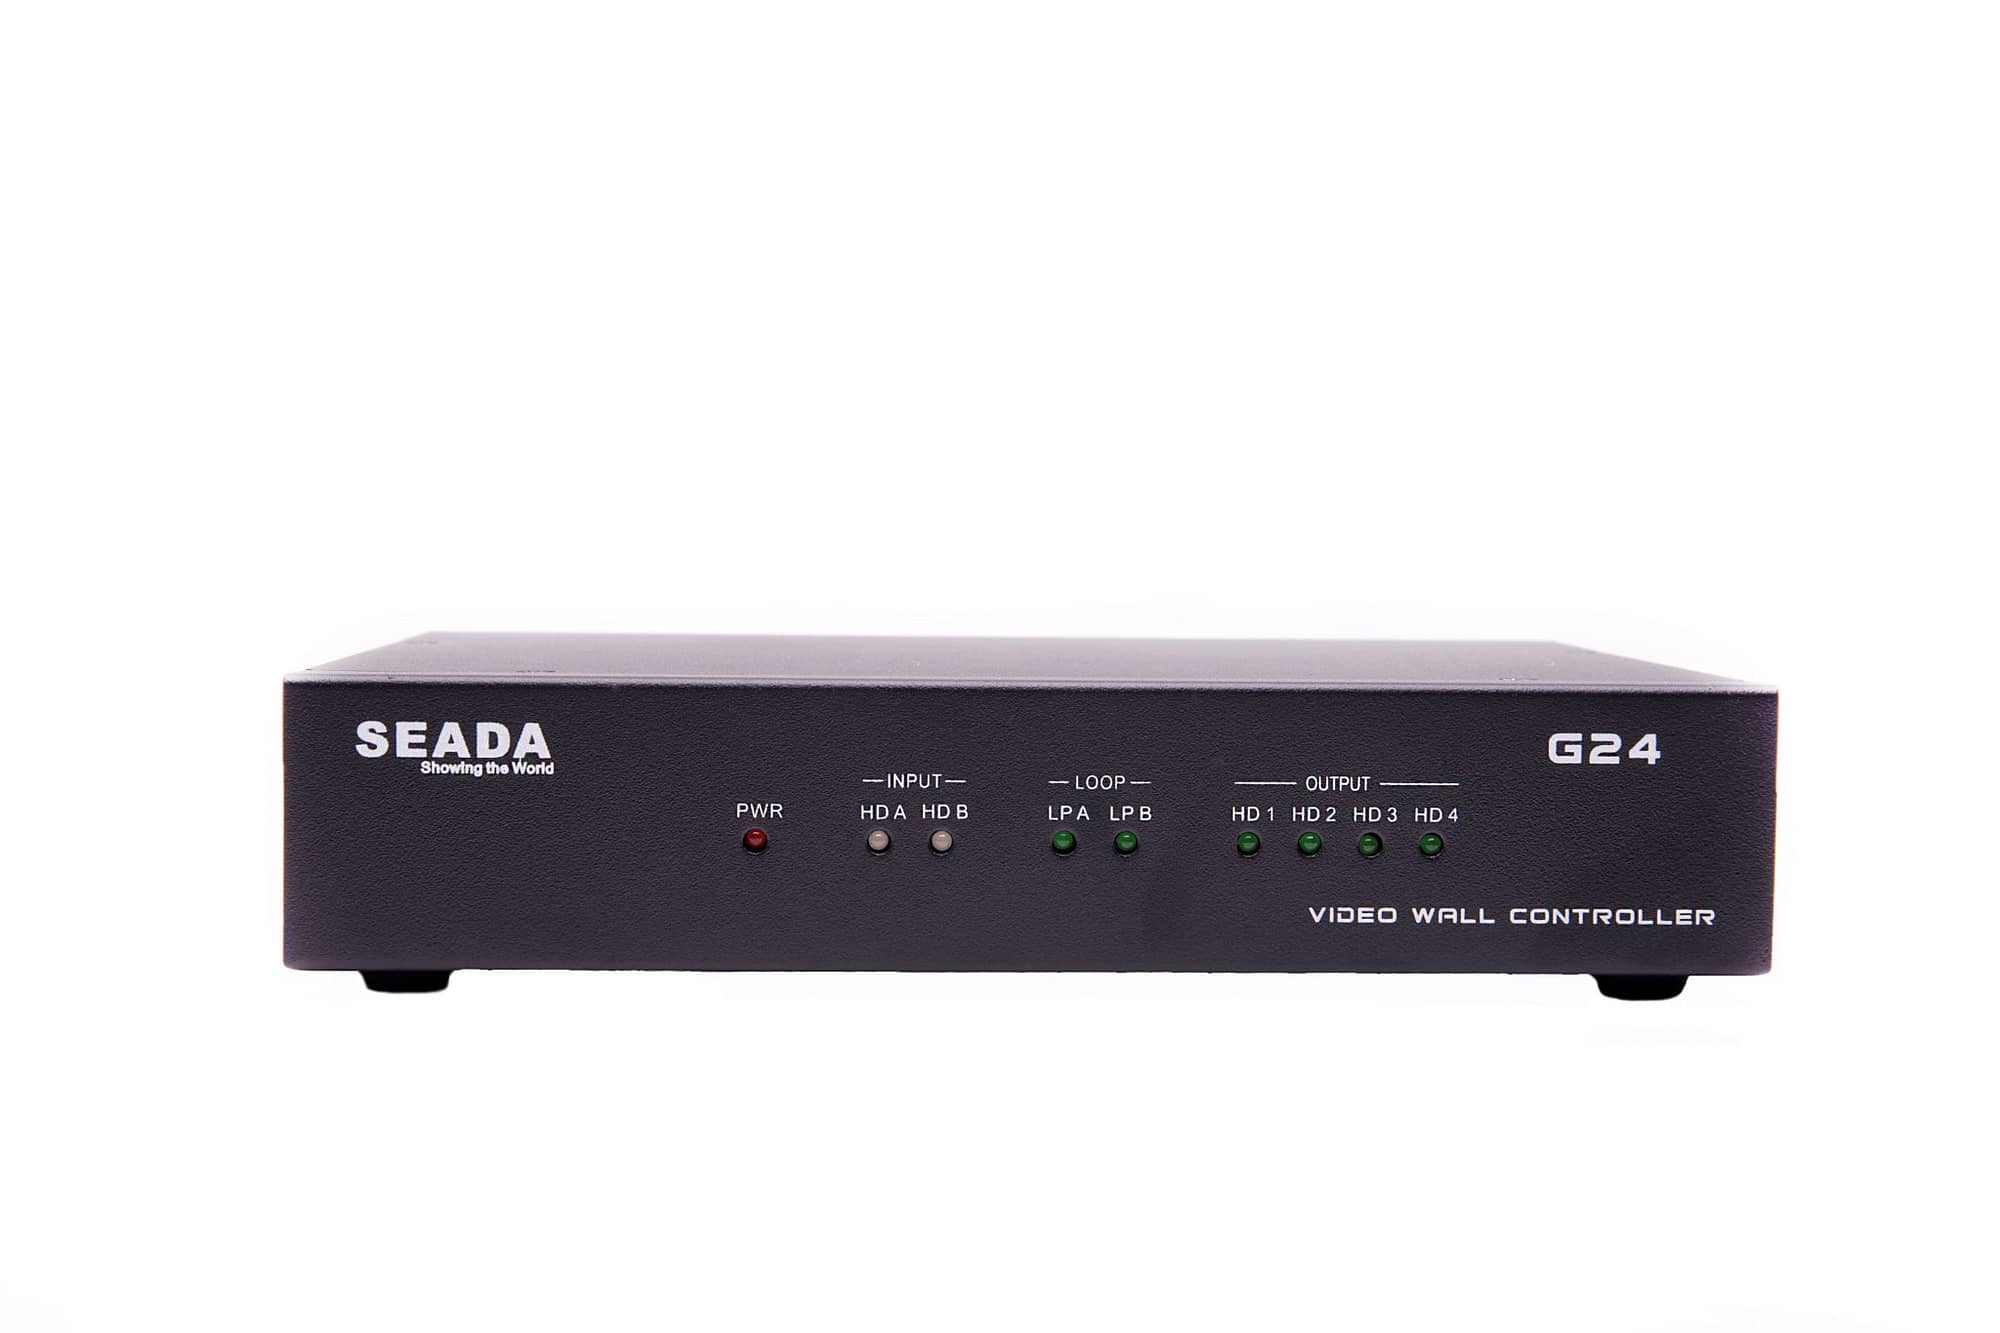 seada G24 g series controller